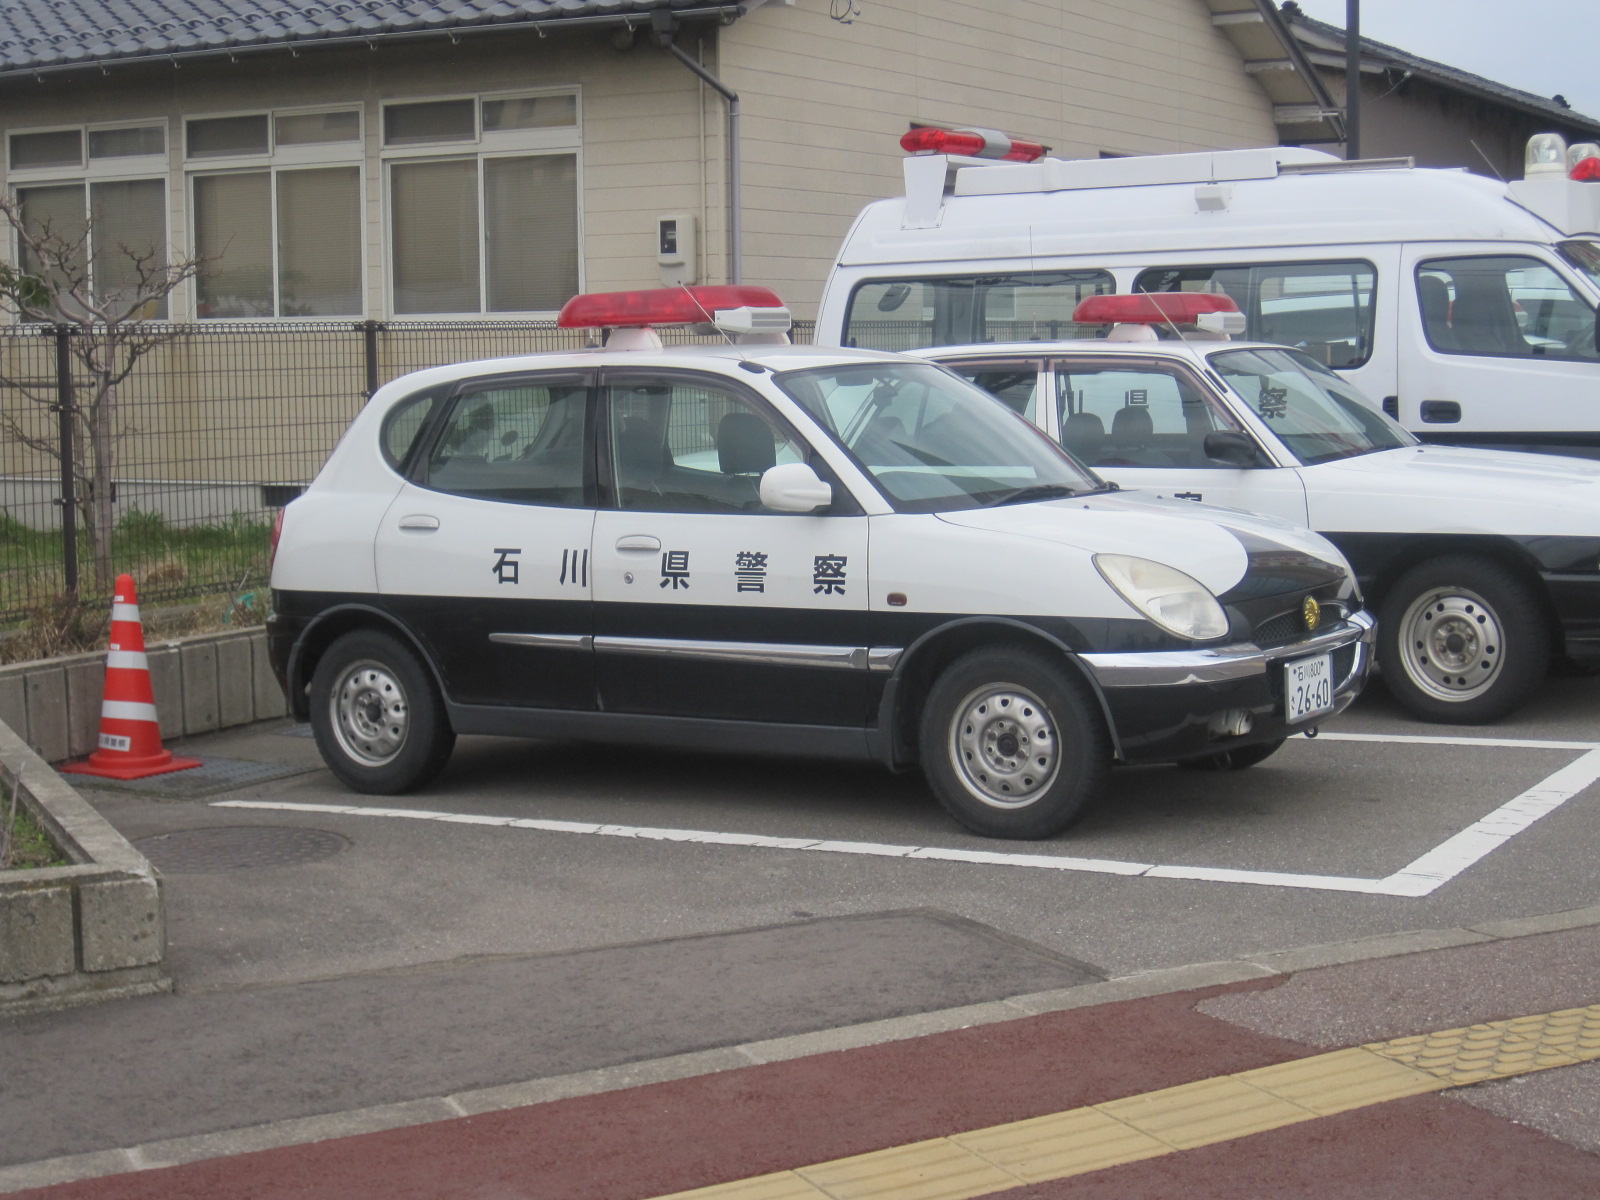 Fichier: Daihatsu Storia Patrolcar.jpg - Wikimedia Commons